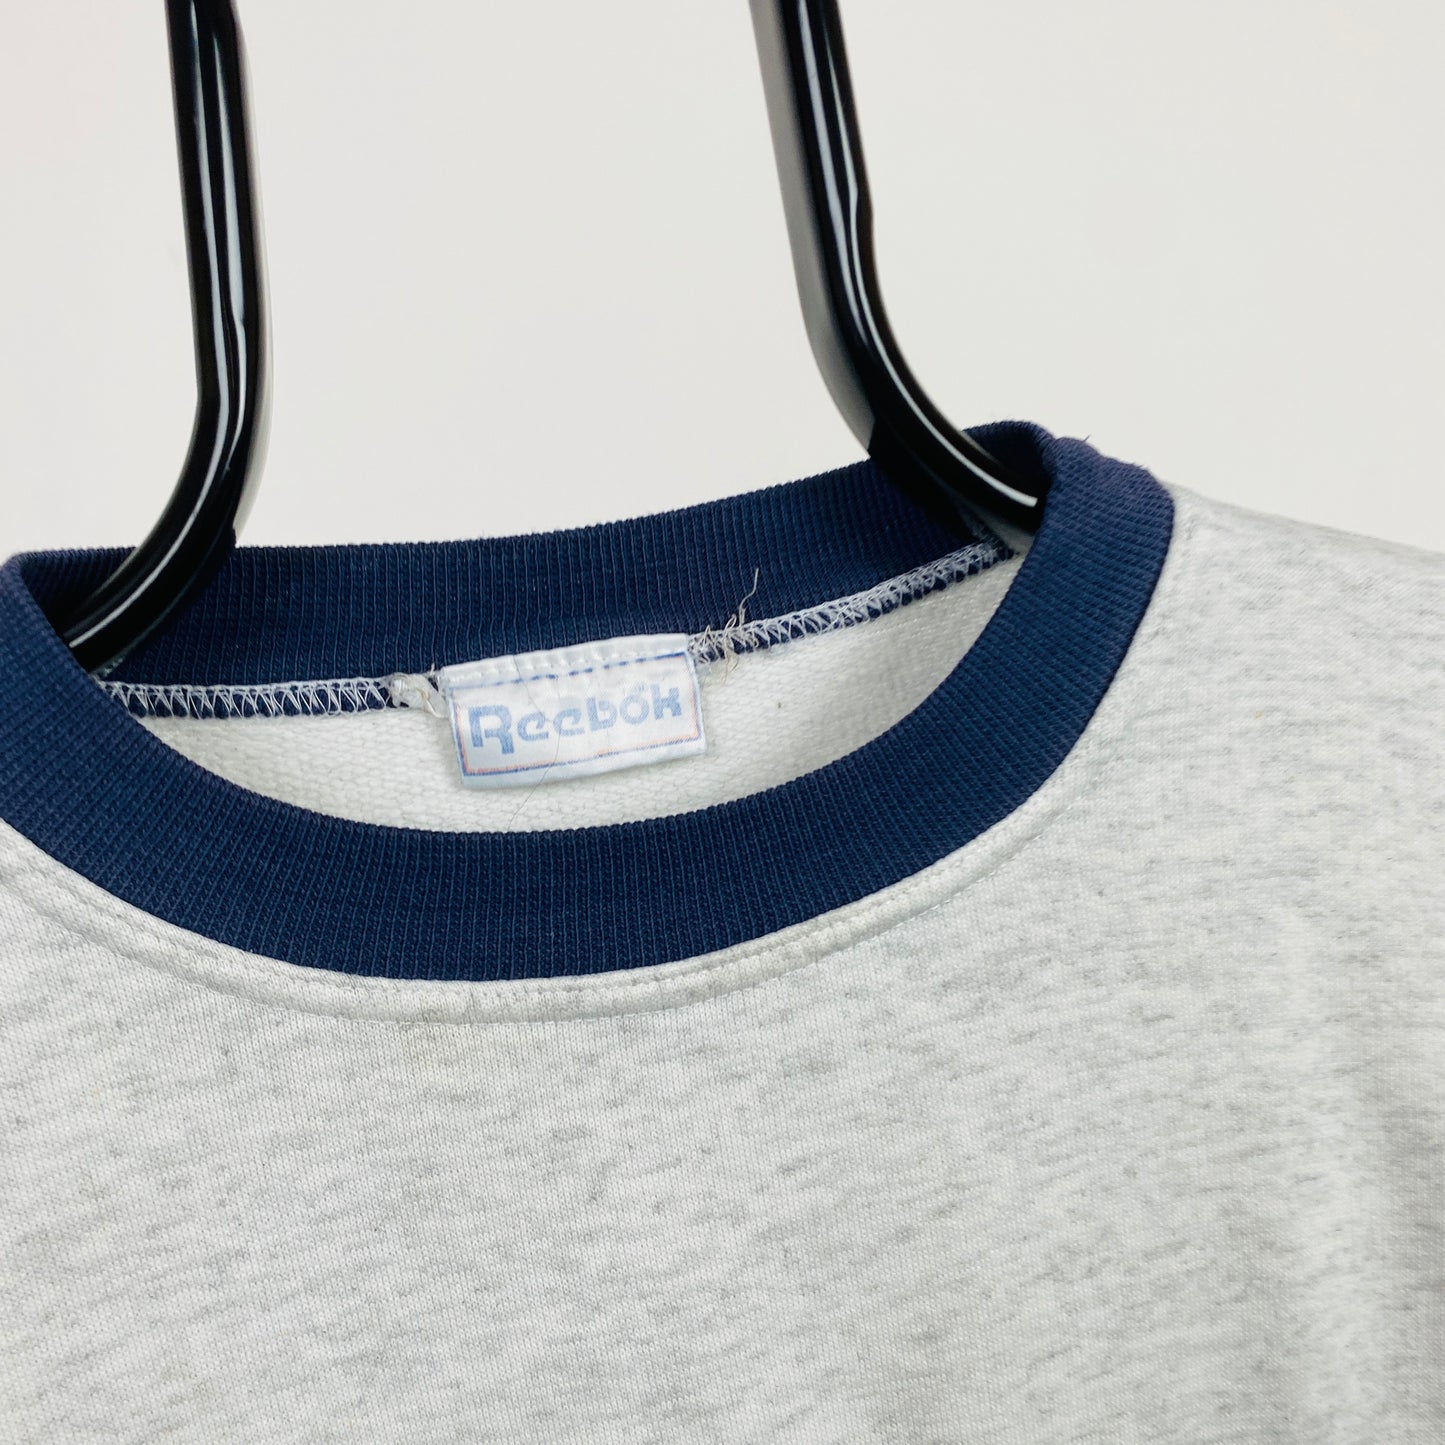 Retro Reebok Membership Sweatshirt Grey Medium